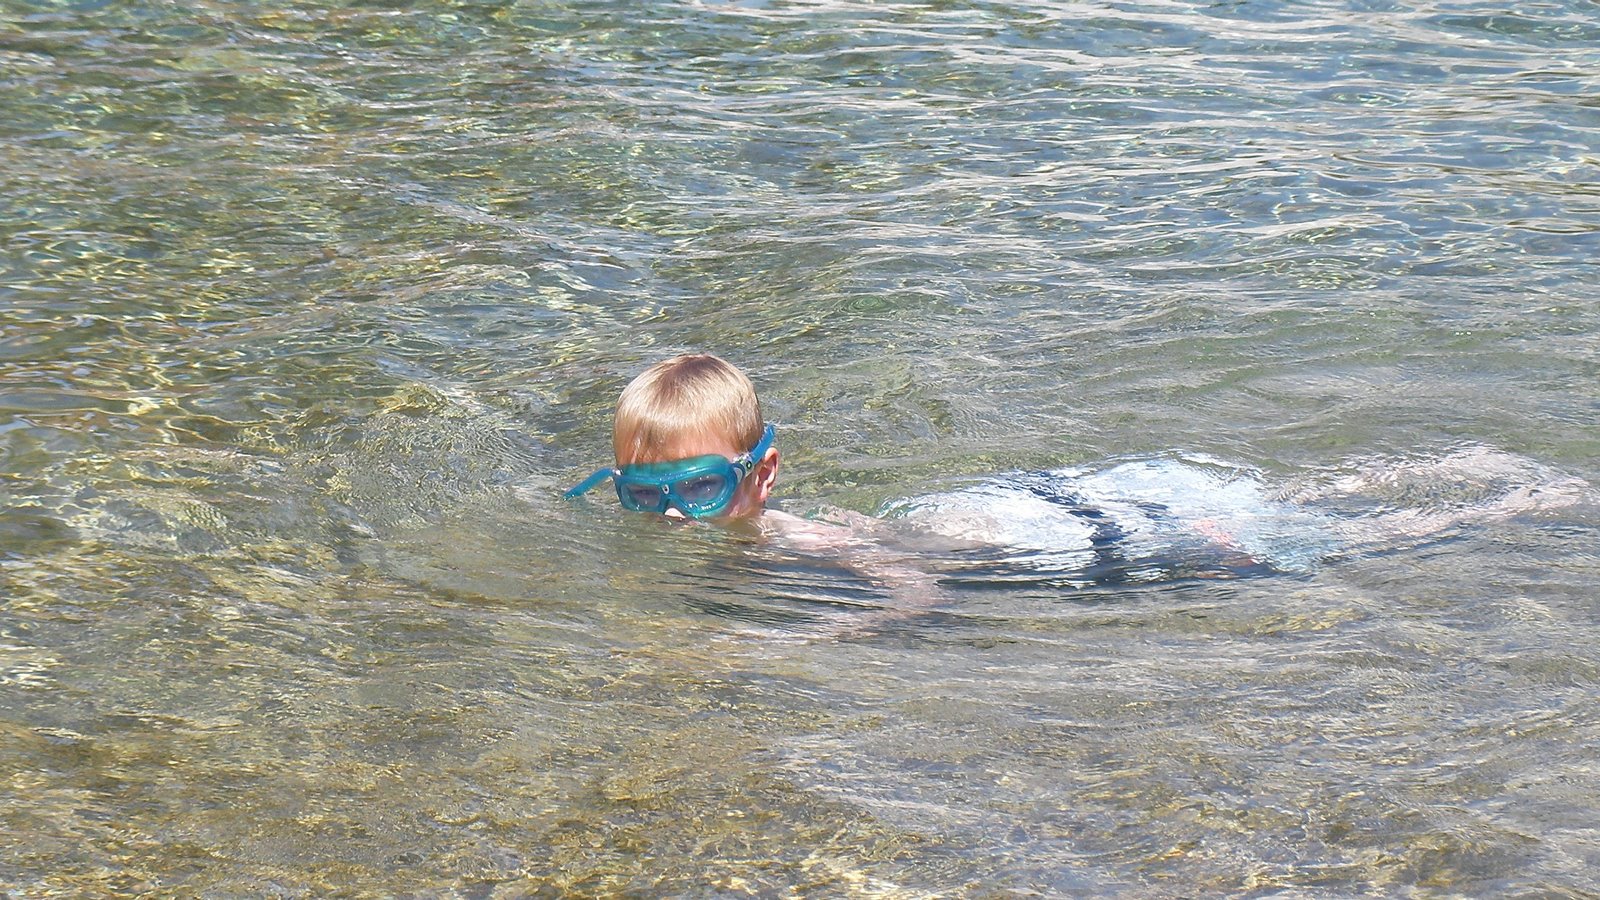 [Hayden+swimming+in+pool.JPG]